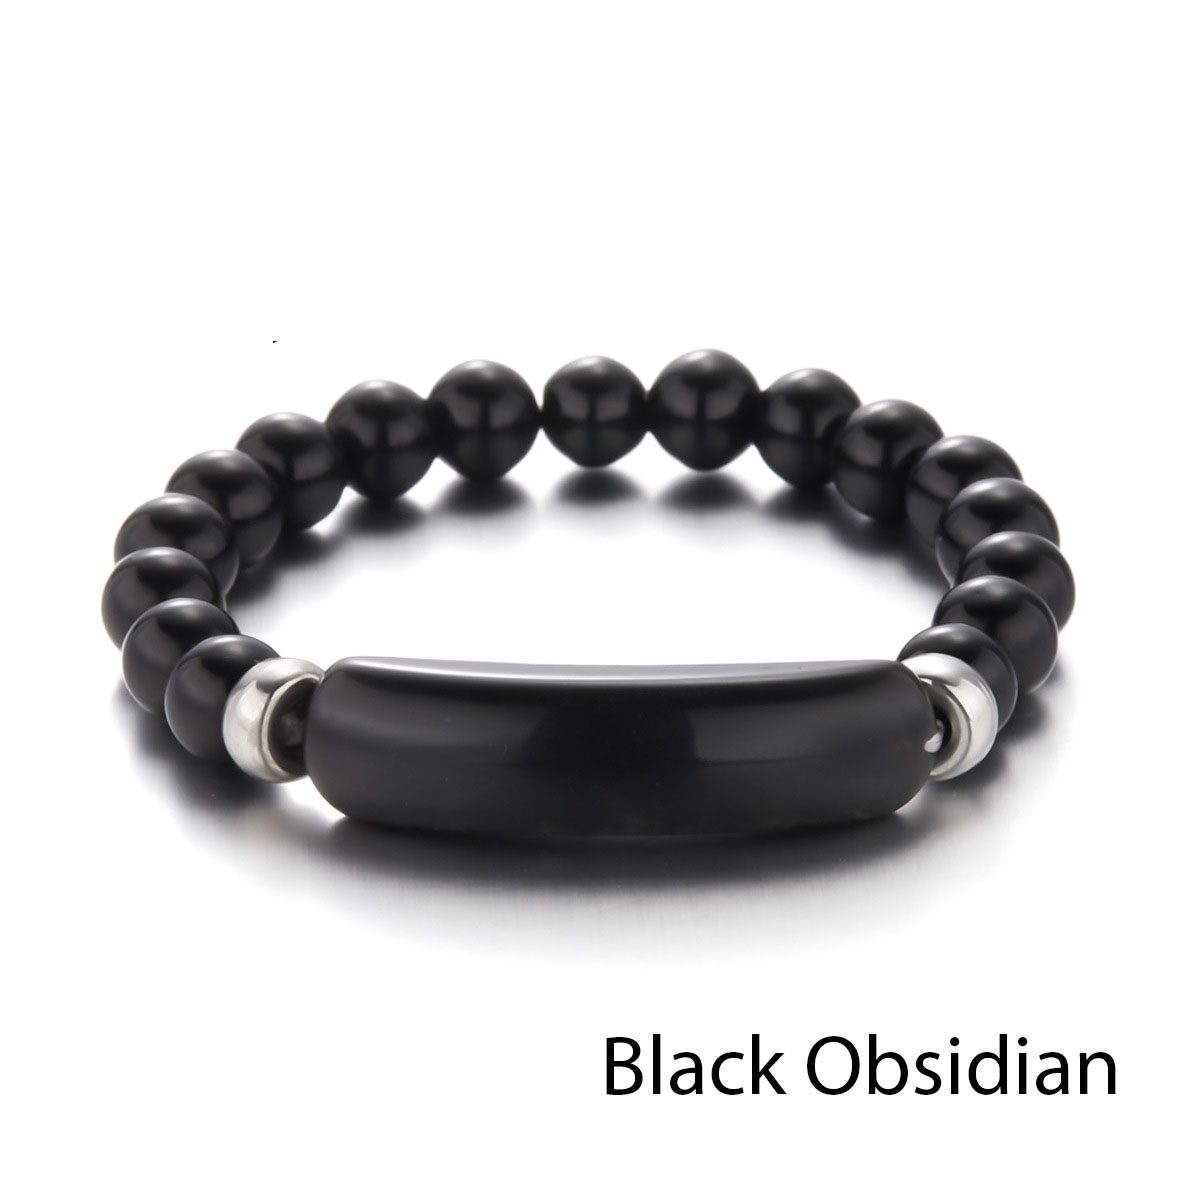 4:Obsidiana preta